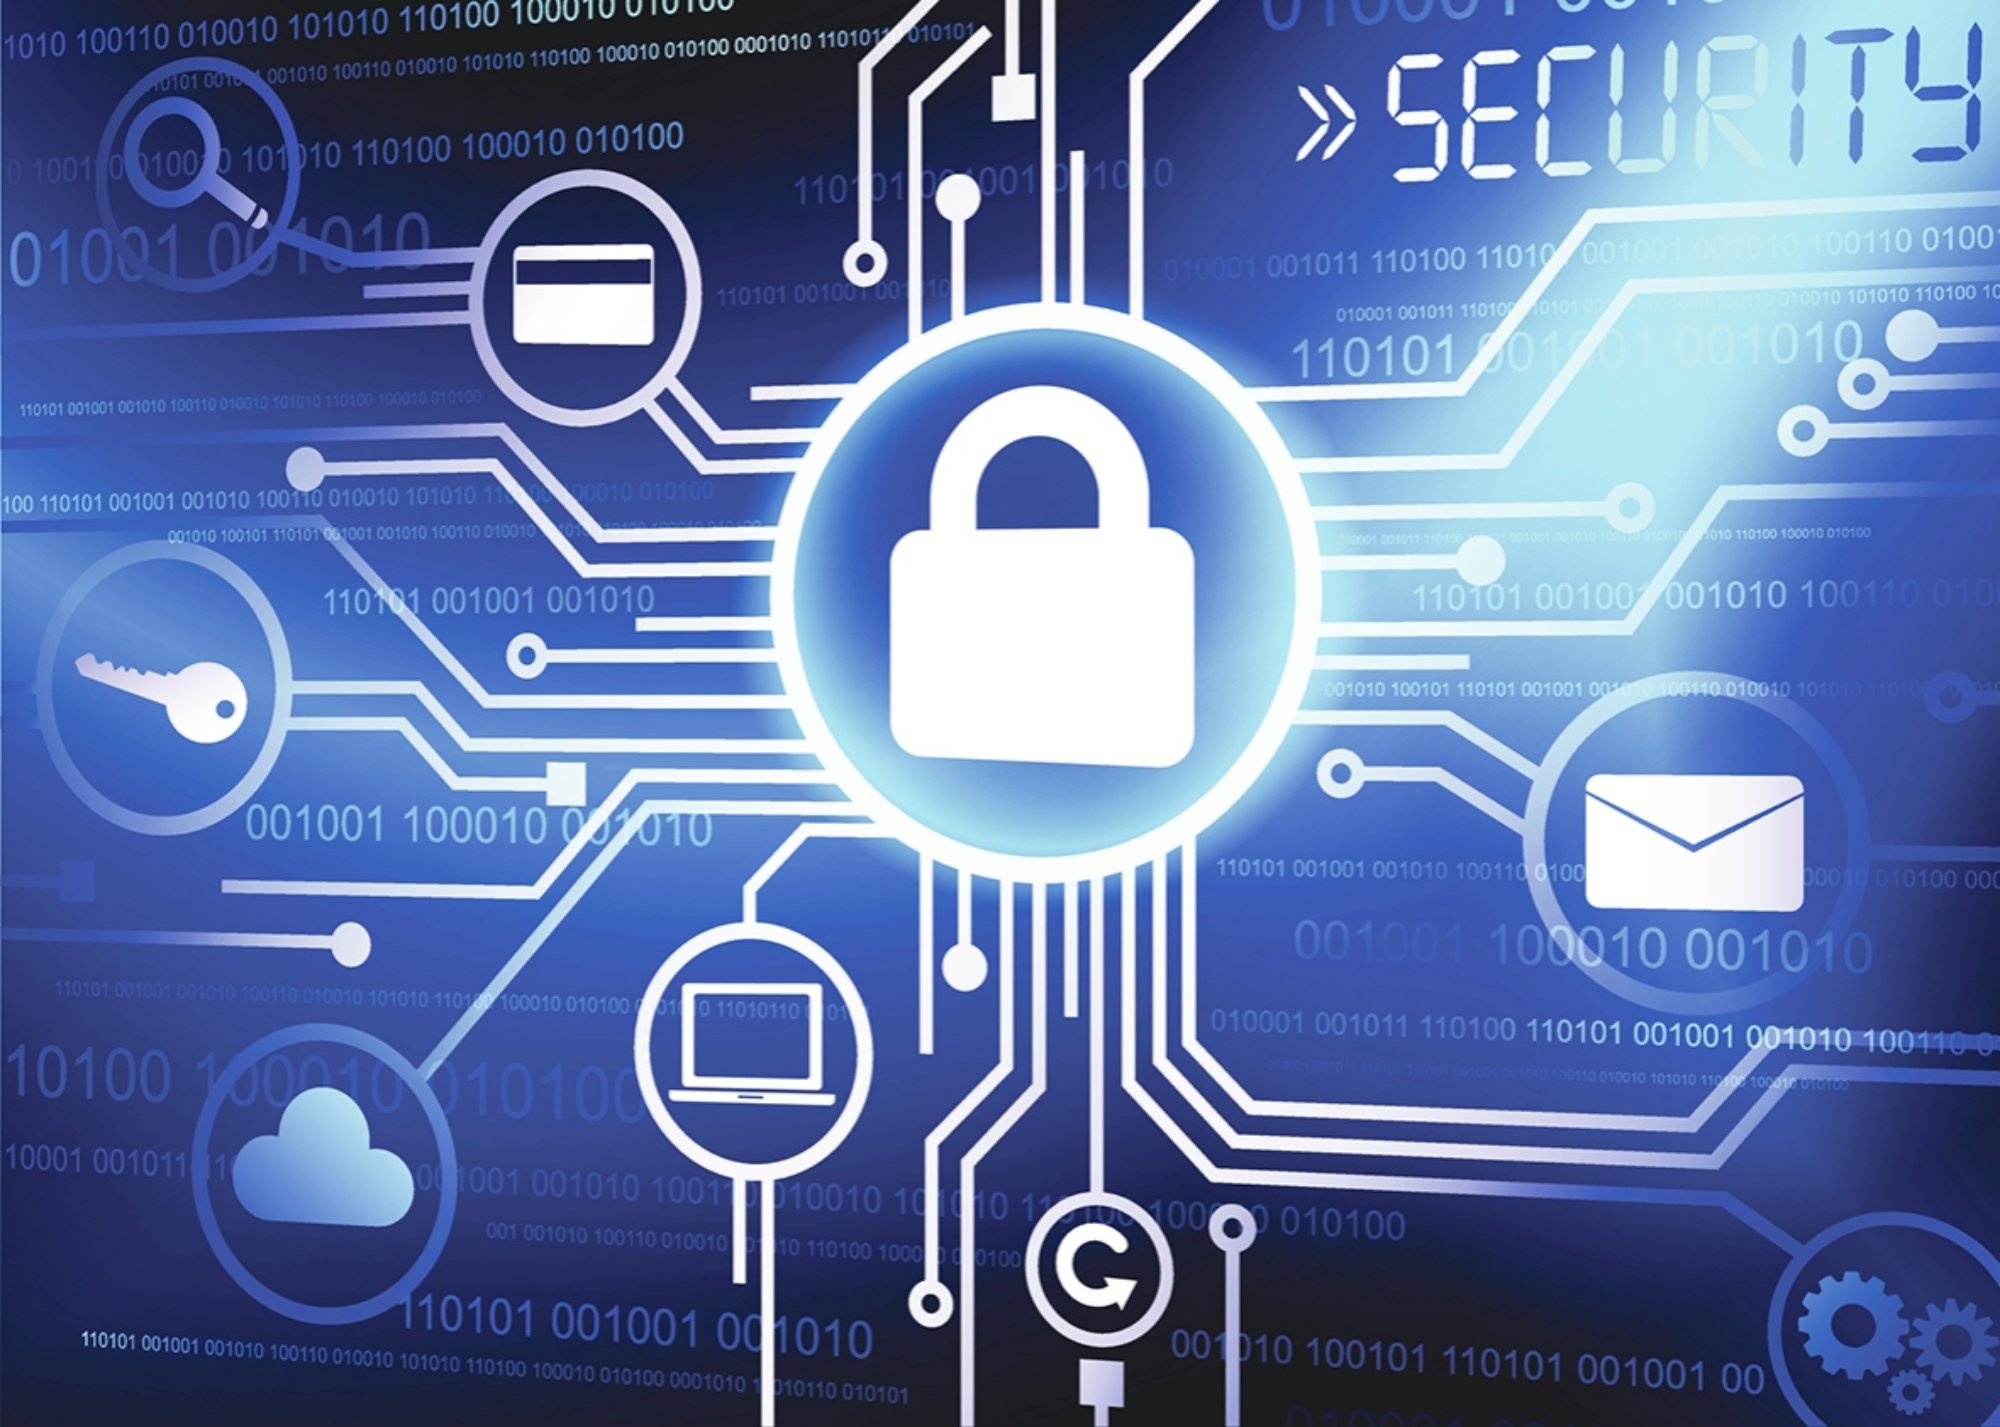 Asymmetric Threats in Cybersecurity